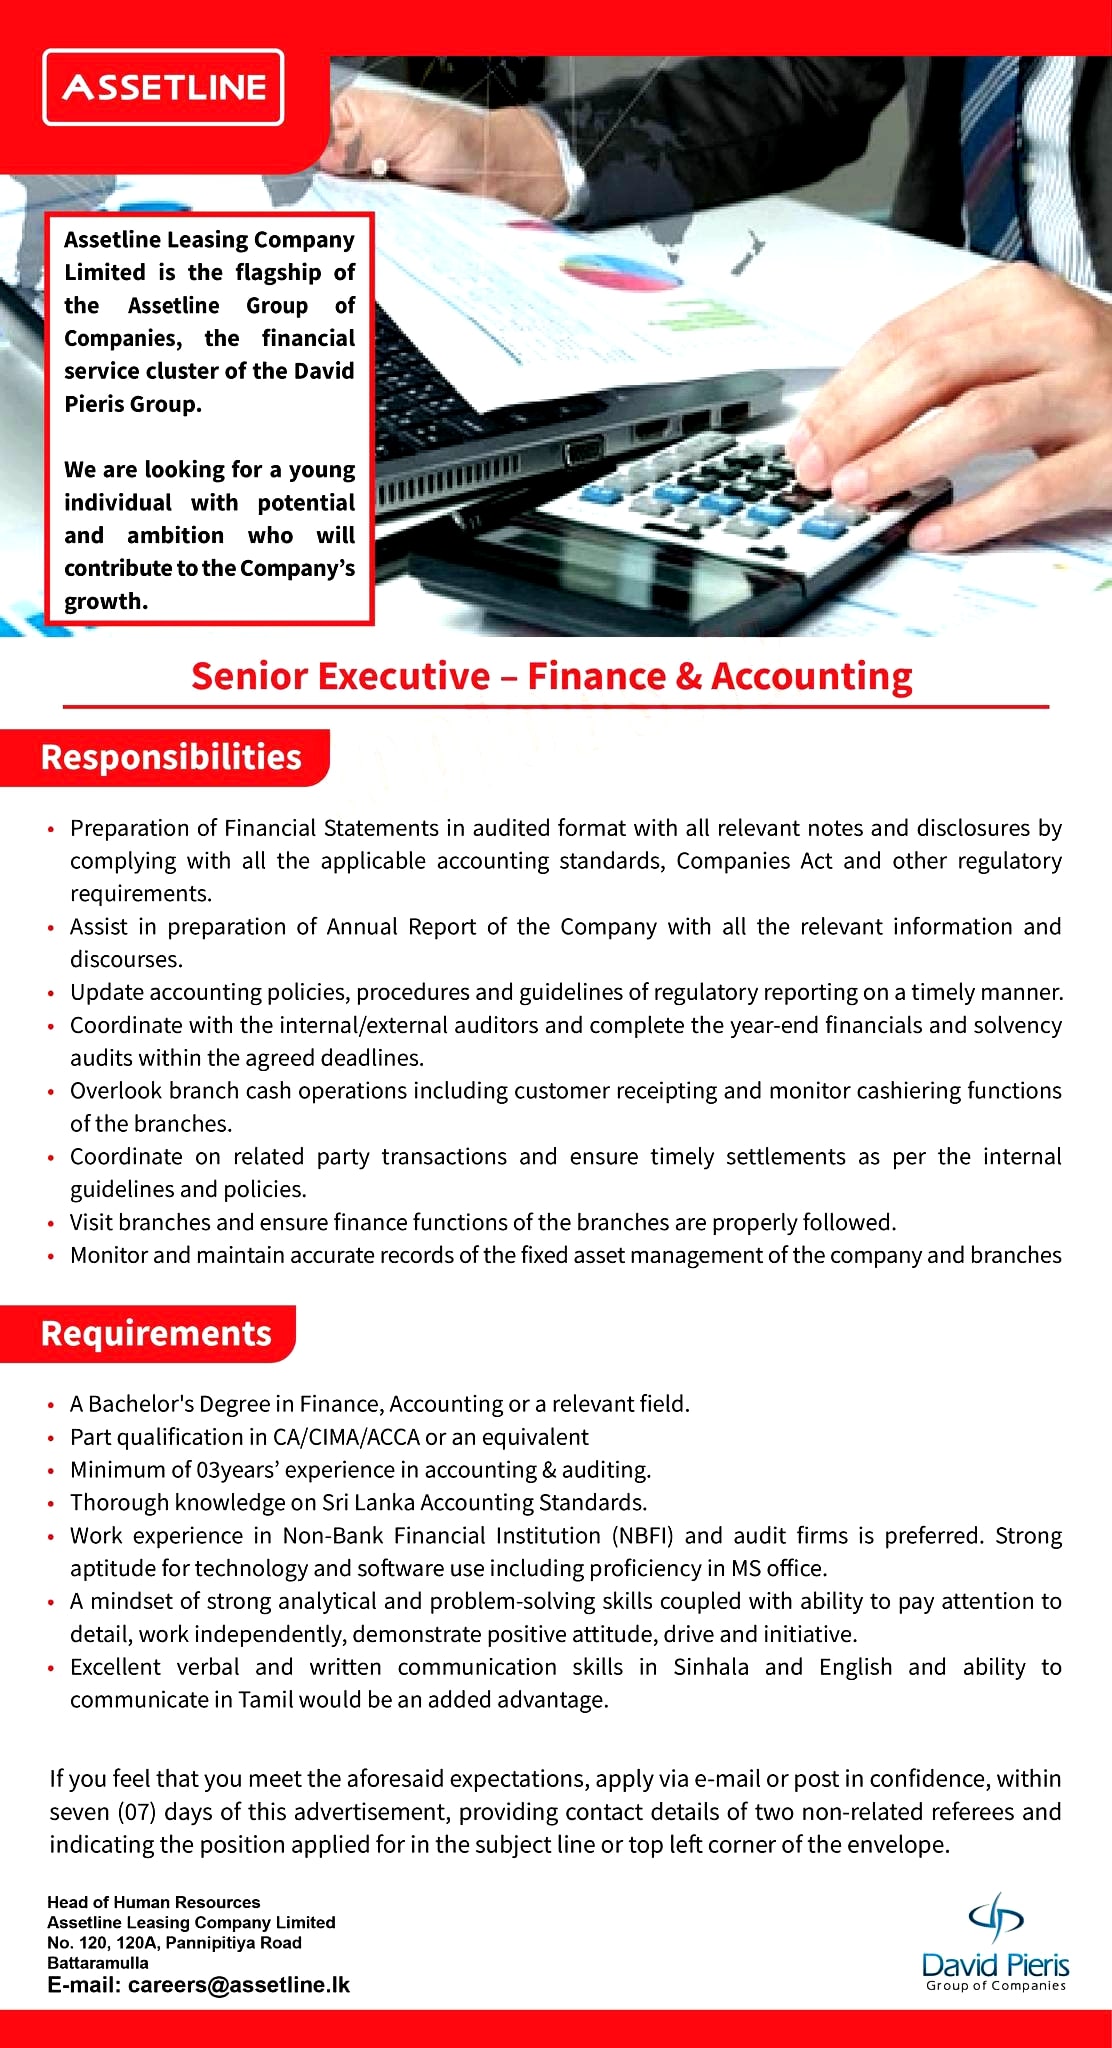 Senior Executive - Finance & Accounting - Asia Asset Finance Jobs Vacancies